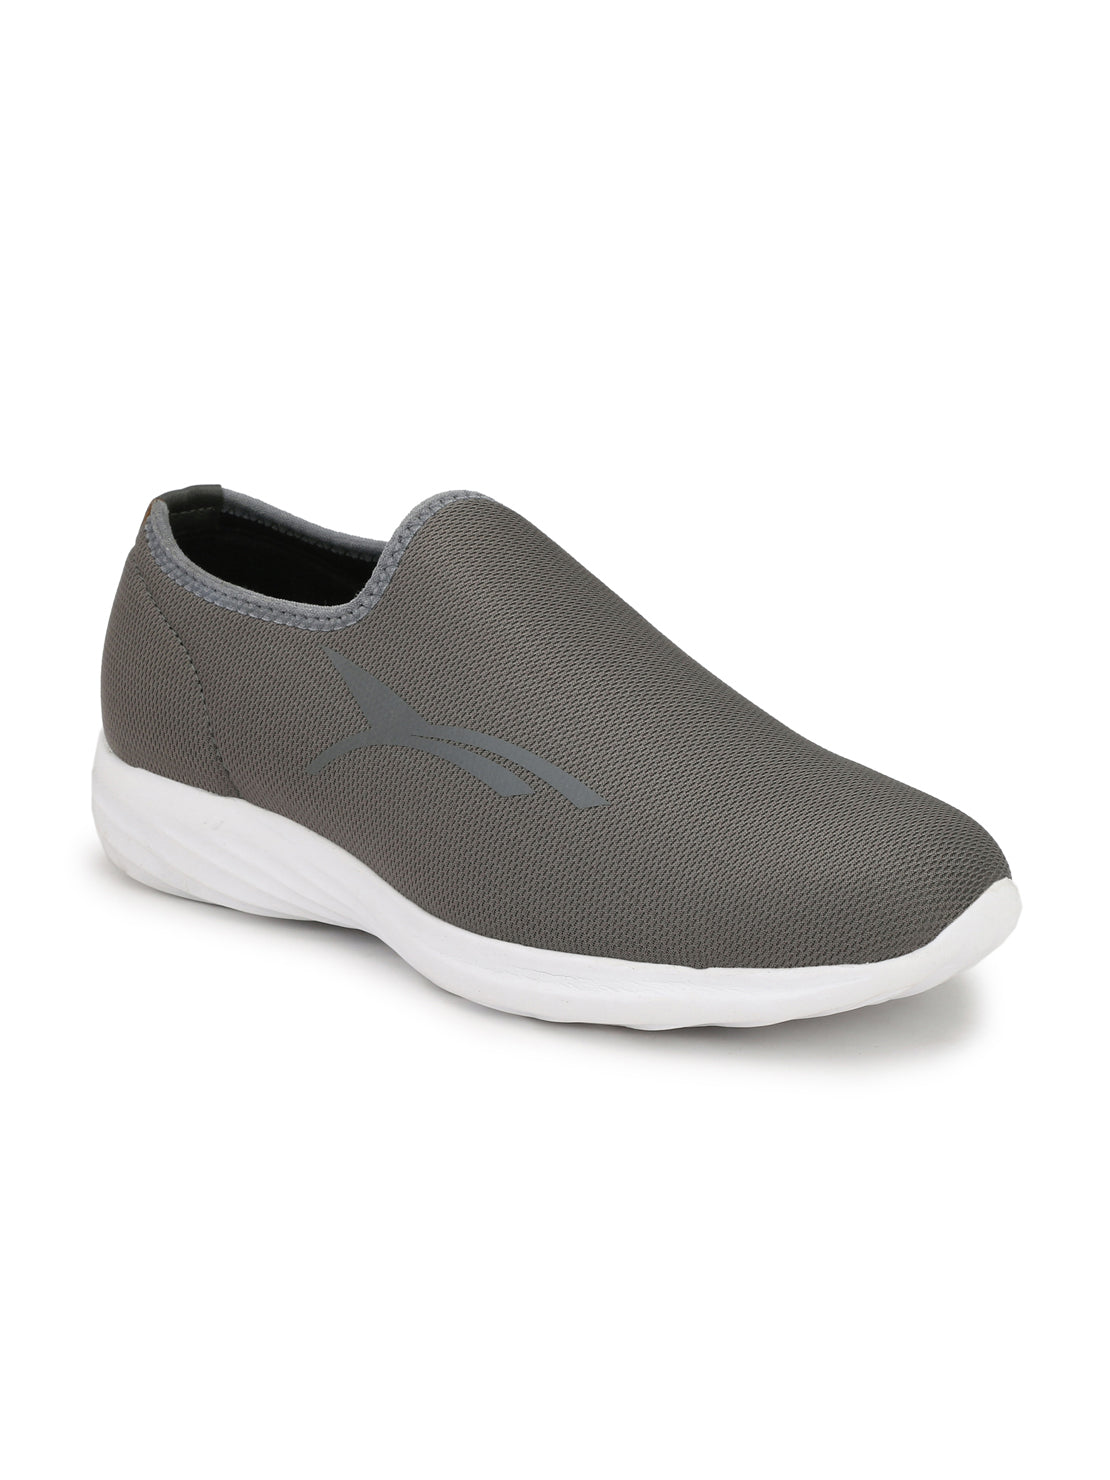 Hirolas® Men's Black Slip On Walking Sport Shoes (HRL1933GRY)